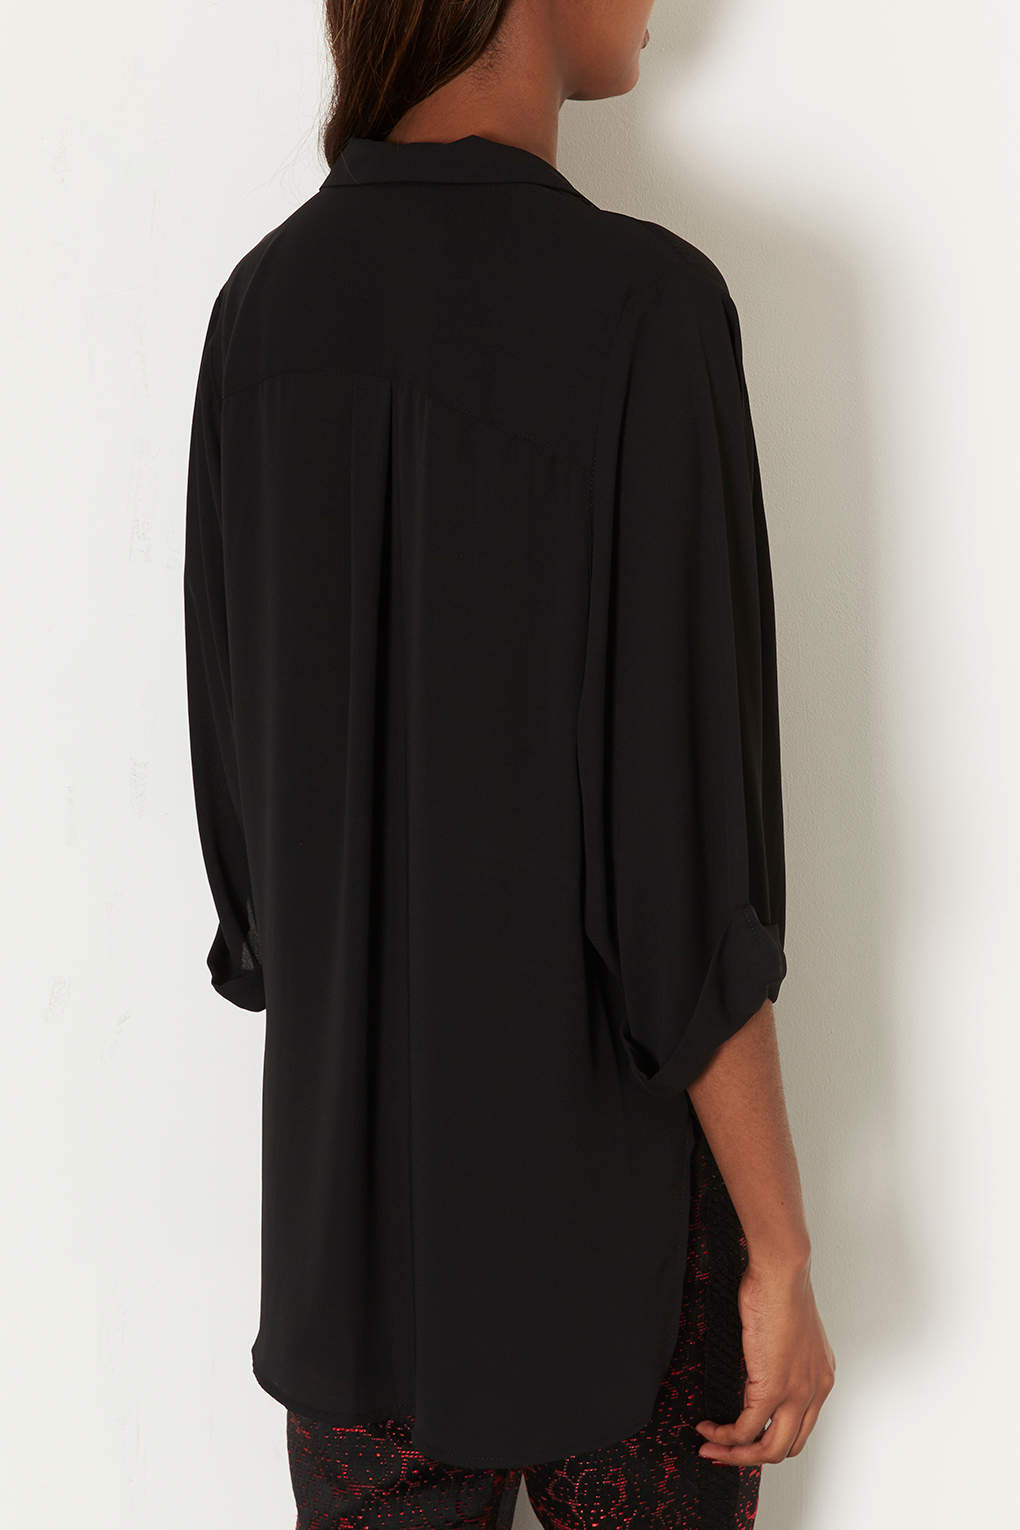 Lyst - Topshop Formal Drape Blouse in Black